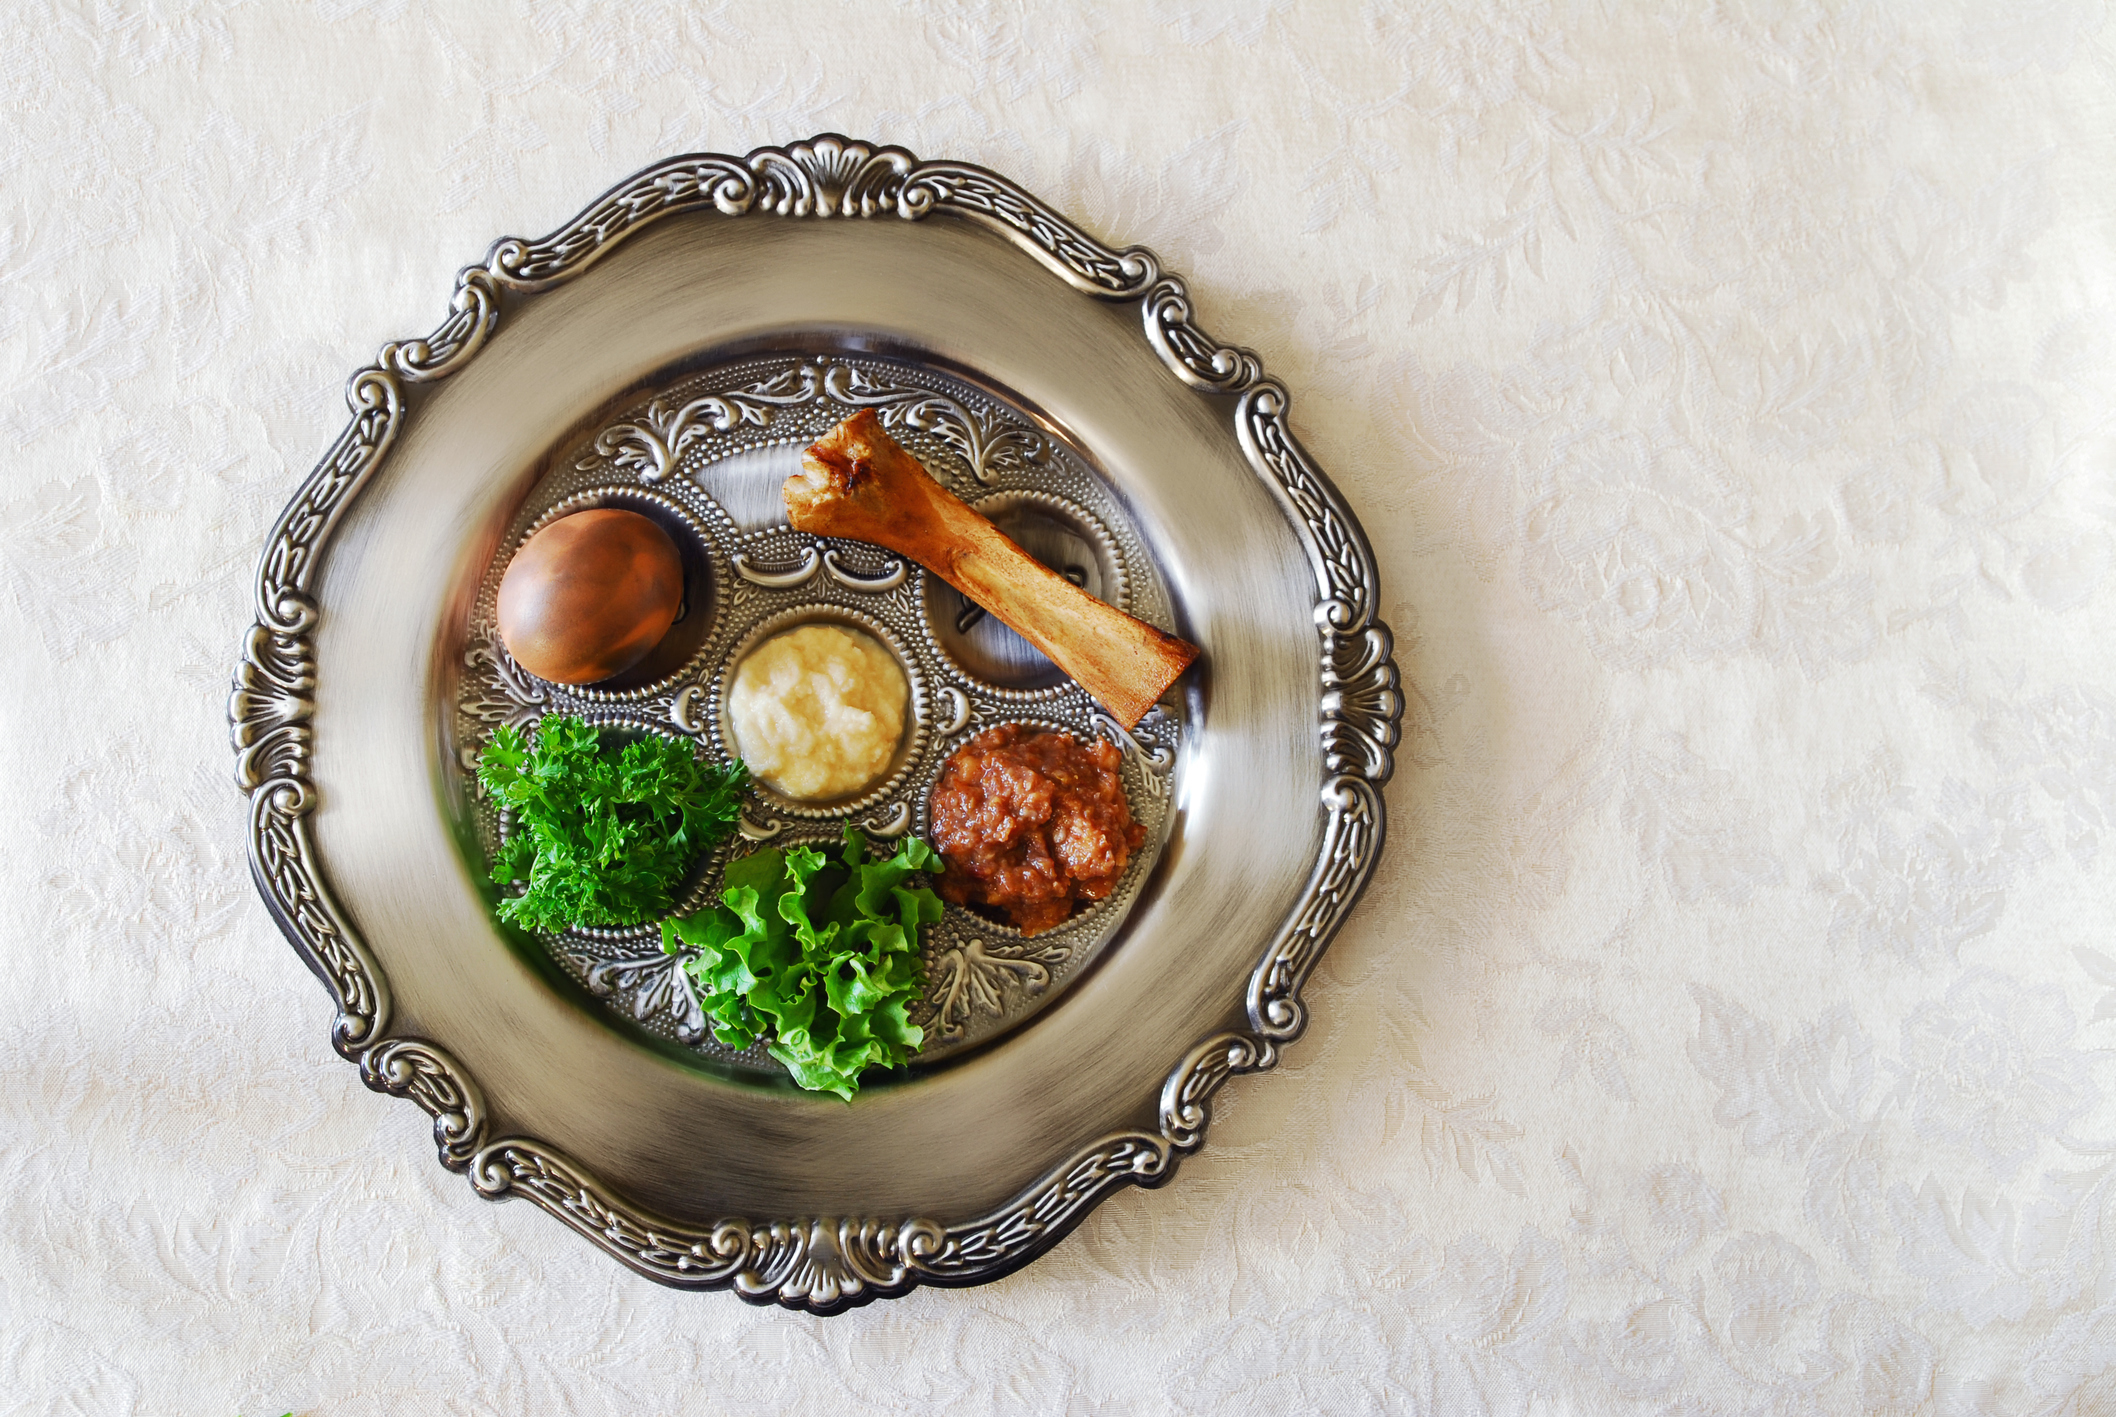 Passover seder plate